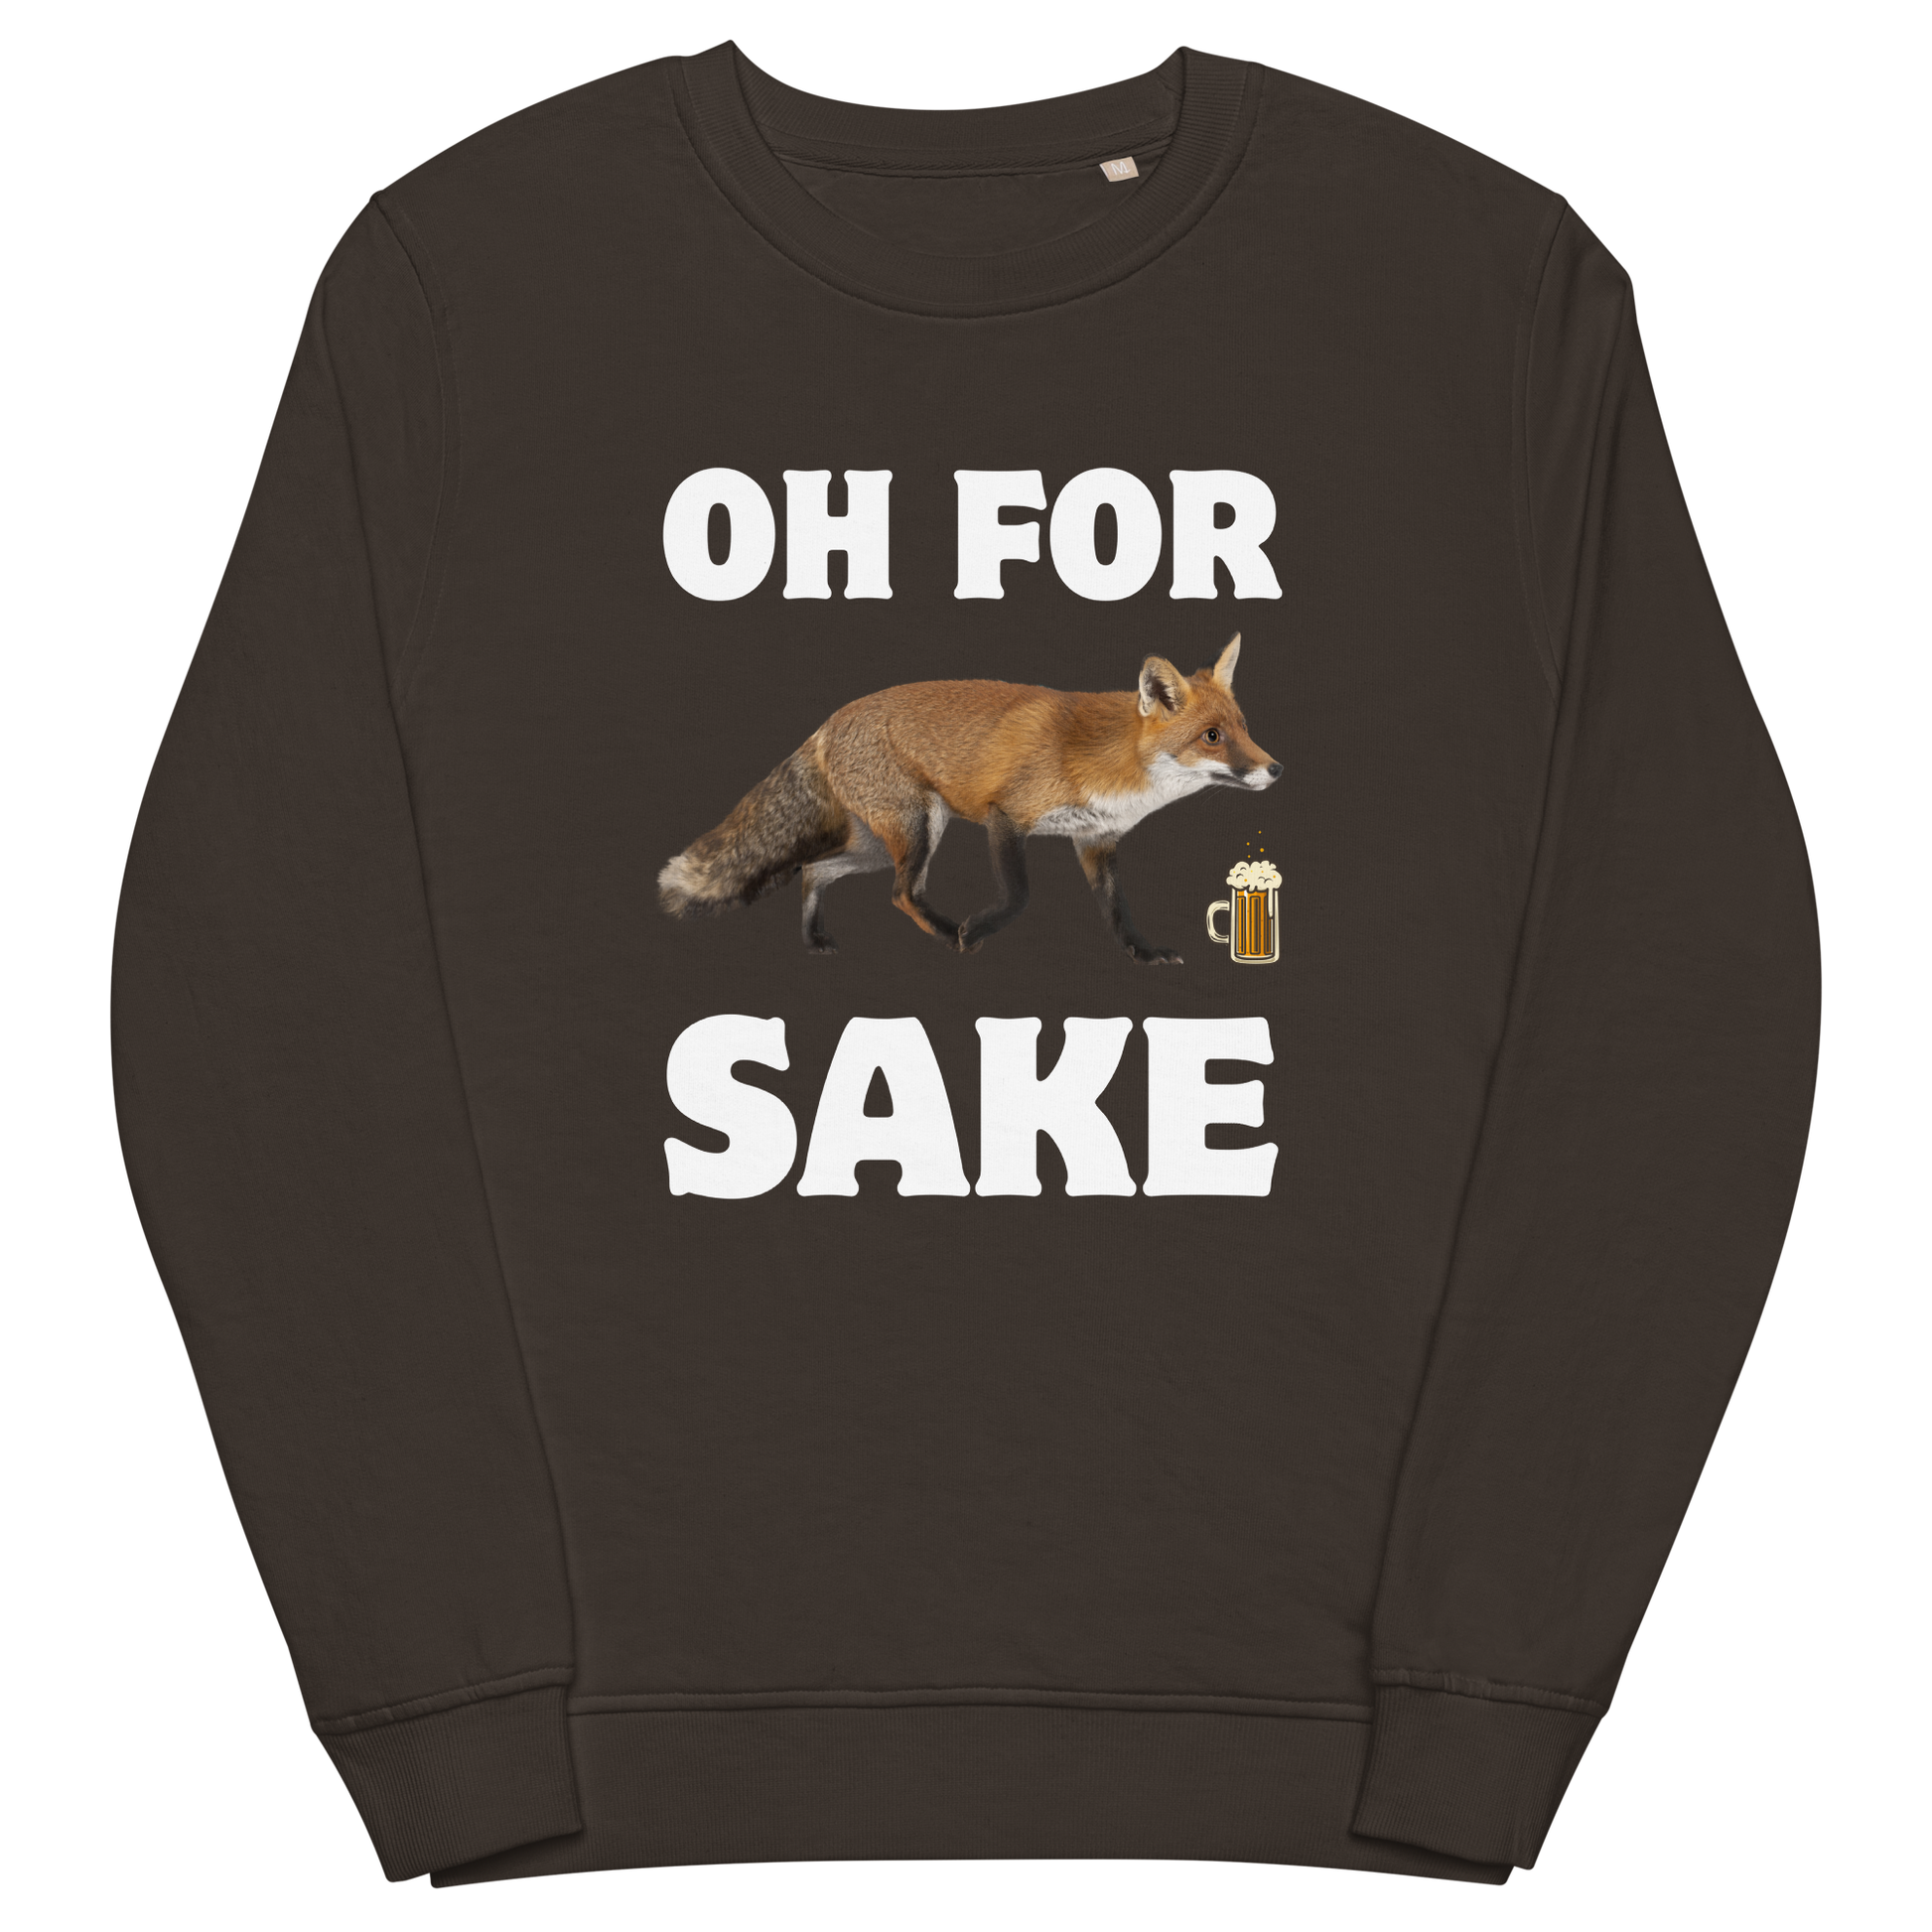 Deep Charcoal Grey Organic Cotton Fox Sweatshirt featuring a Oh For Fox Sake graphic on the chest - Funny Graphic Fox Sweatshirts - Boozy Fox